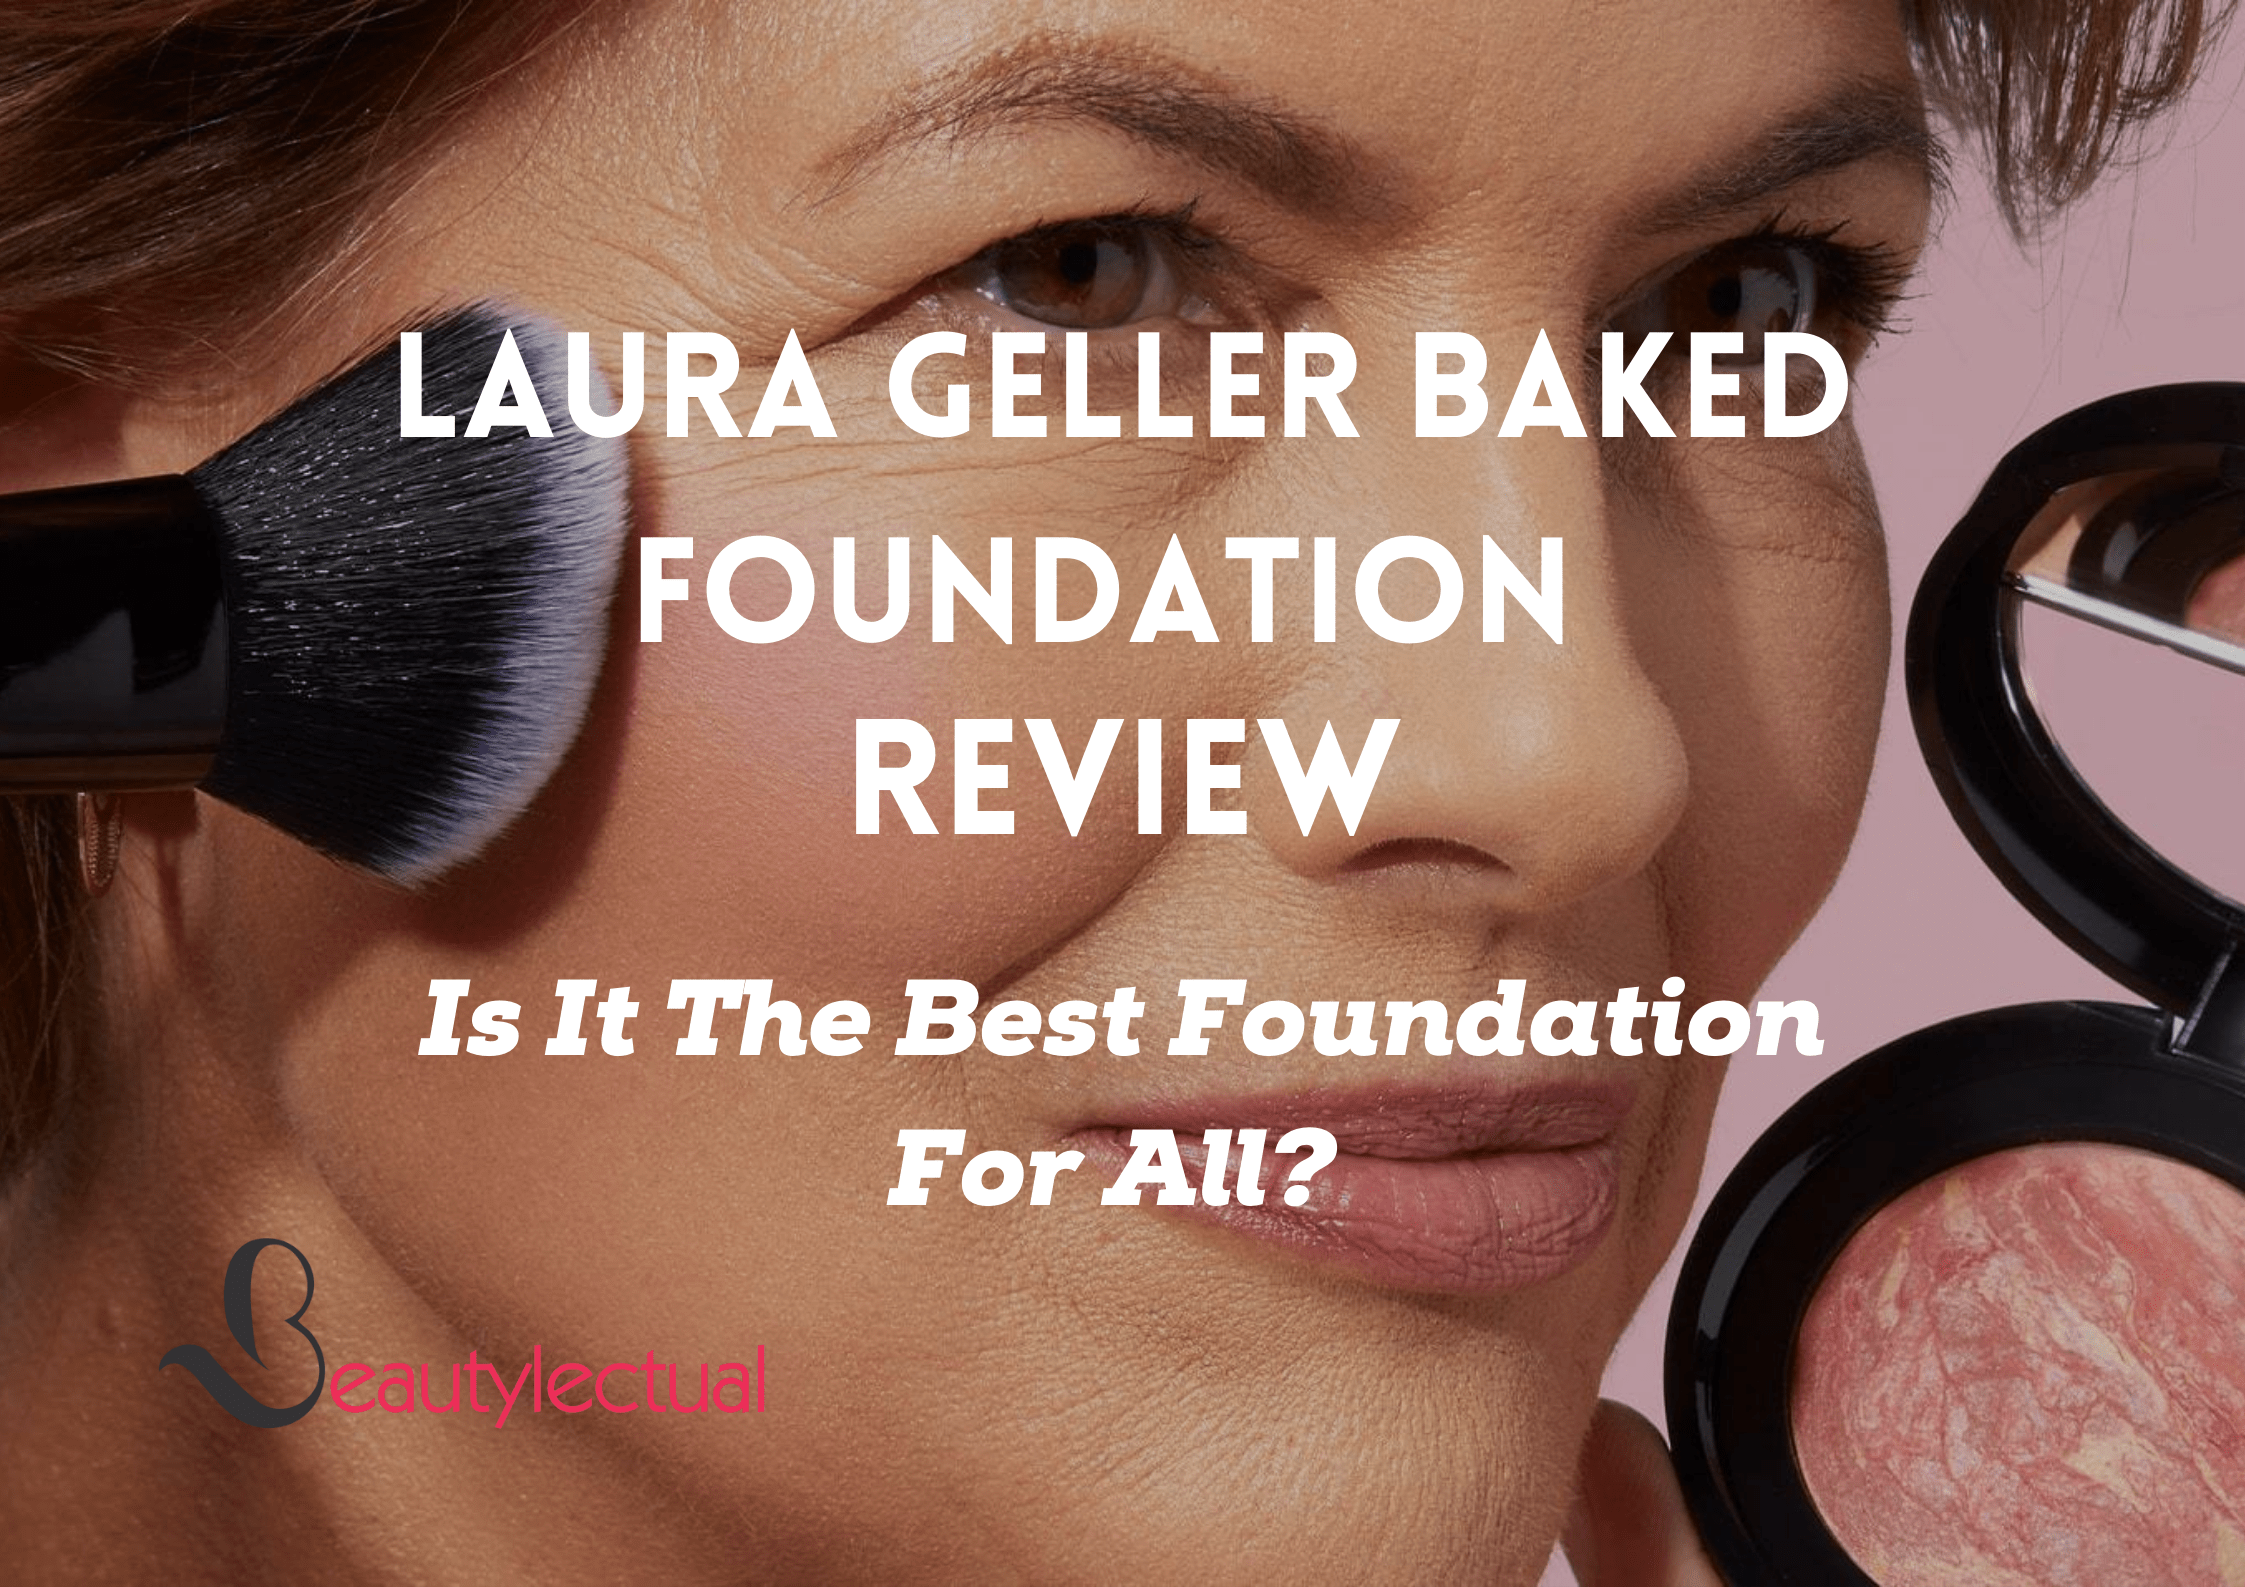 Laura Geller Baked Foundation Reviews